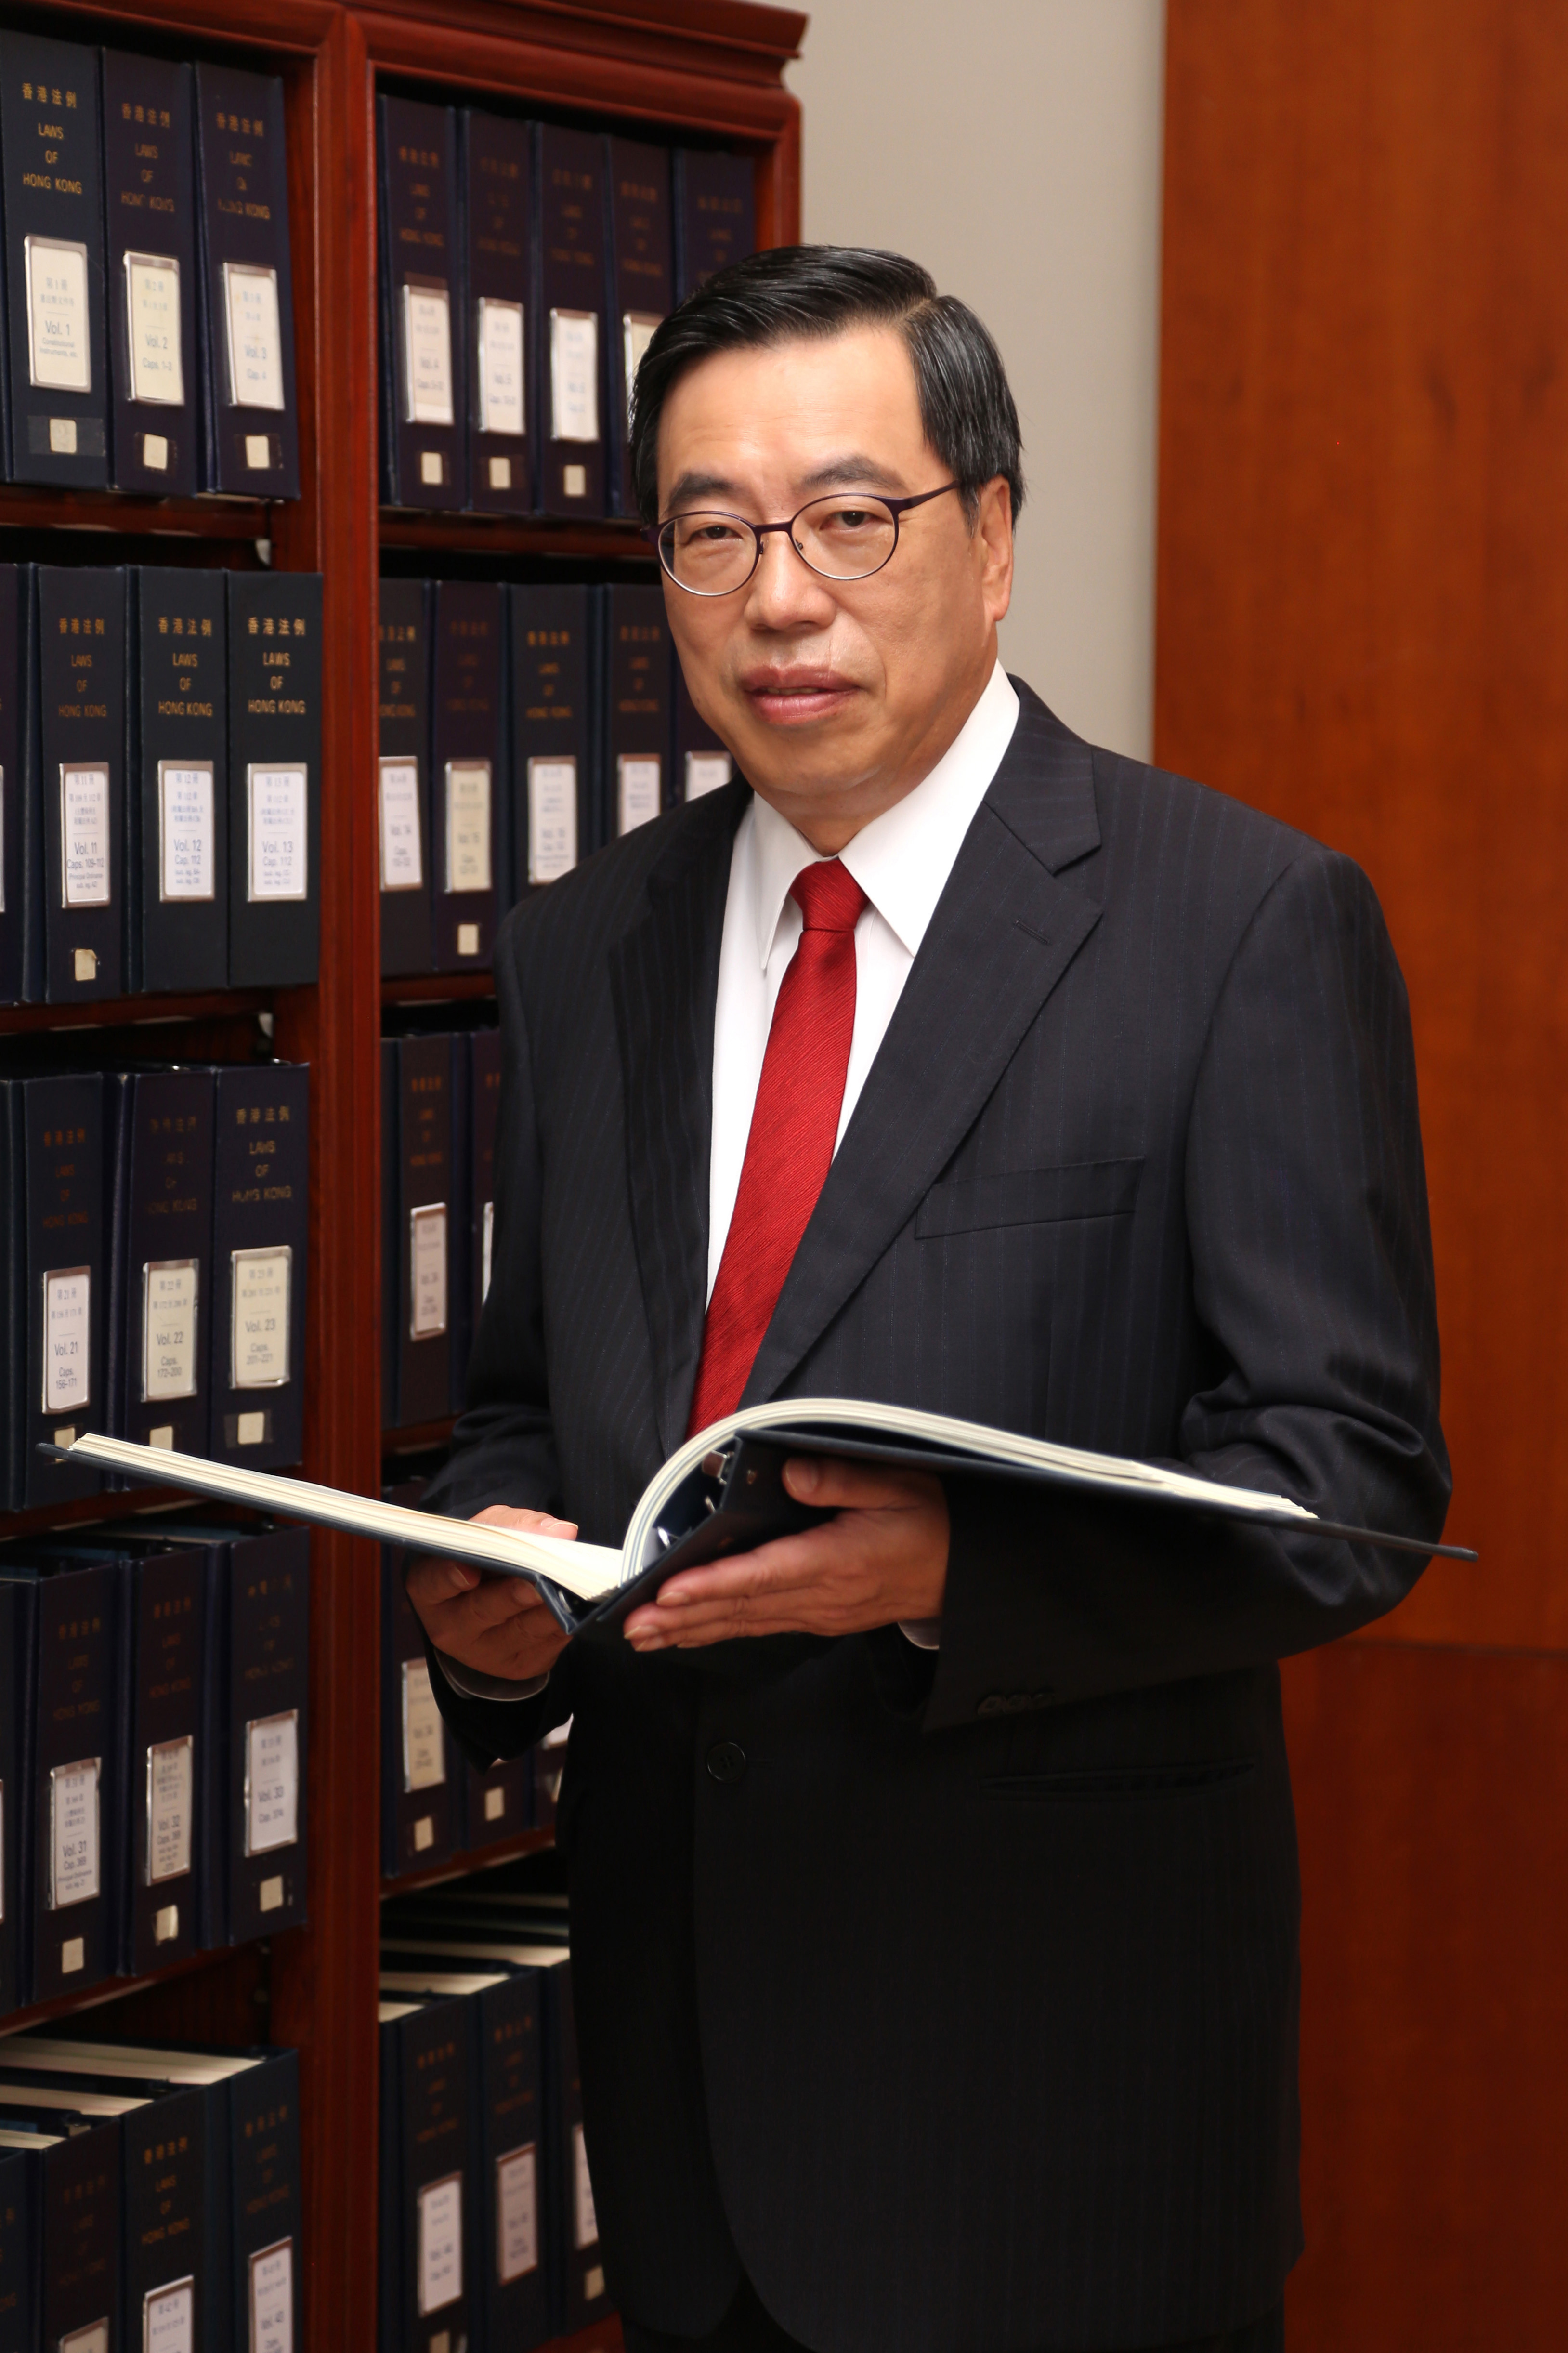 President of the Legislative Council